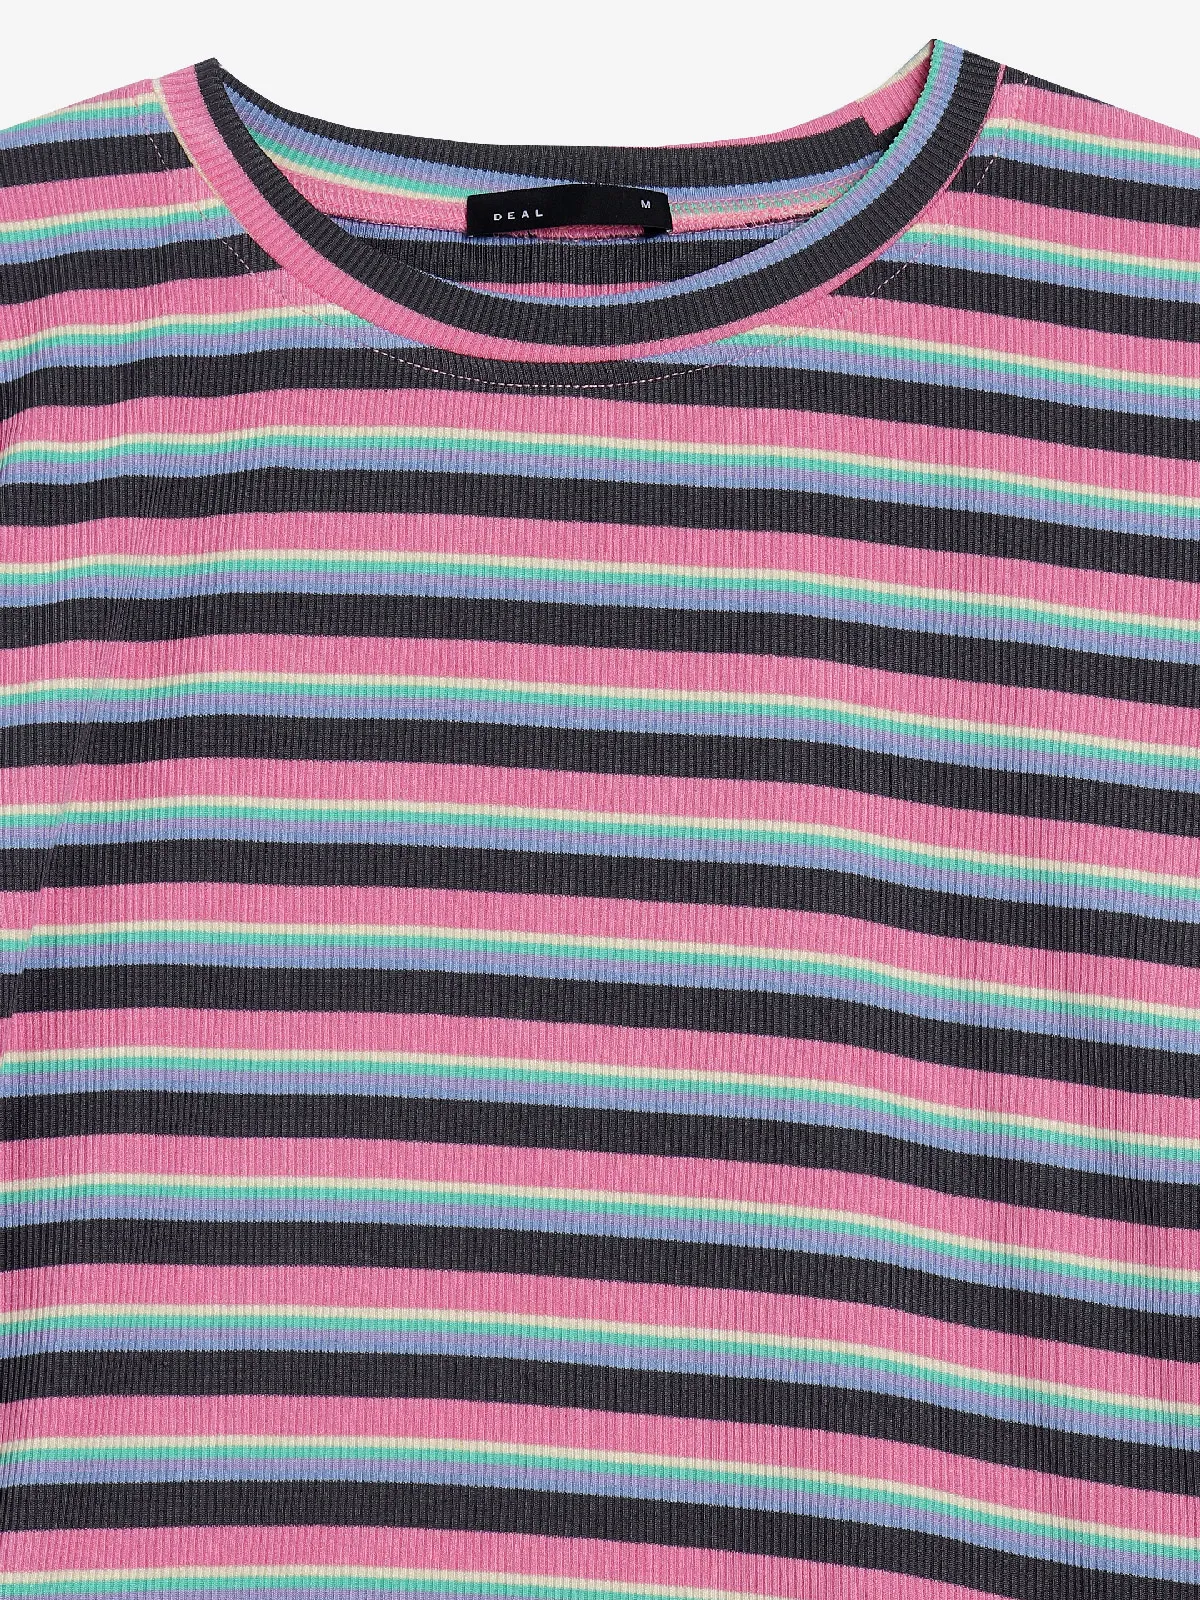 Deal mauve pink printed t-shirt